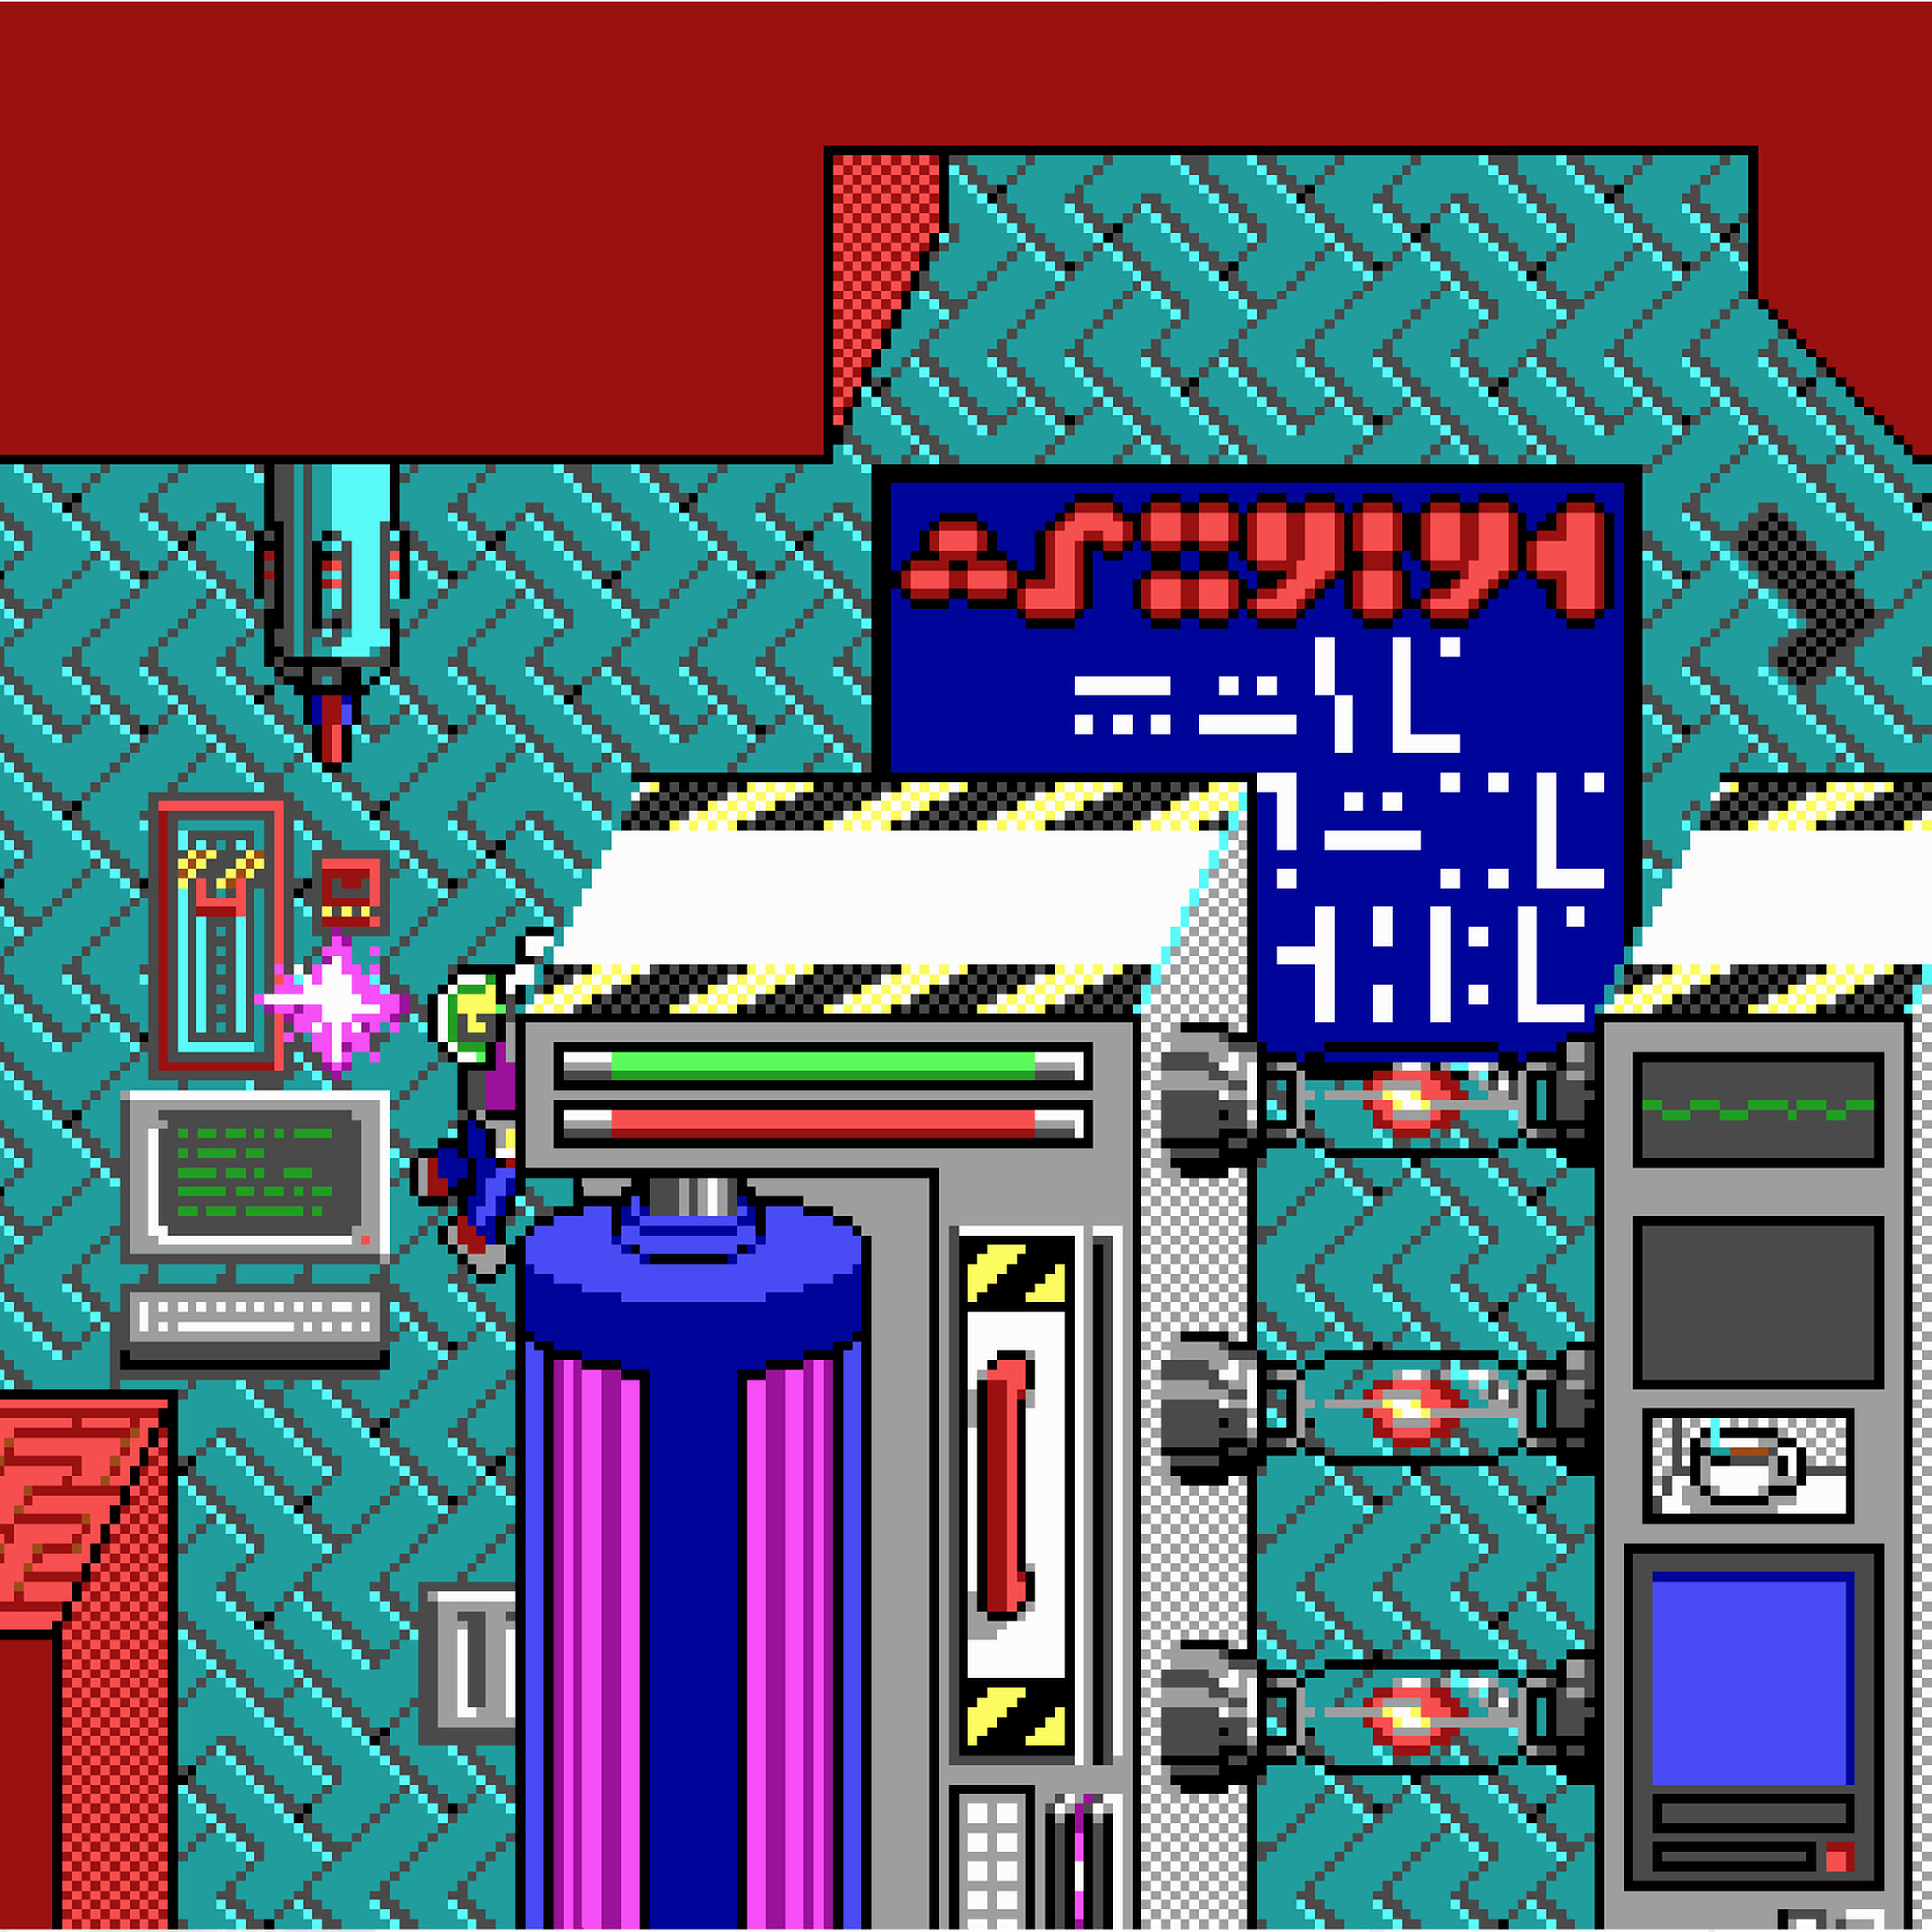 A screenshot from Commander Keen 5: The Armageddon Machine.